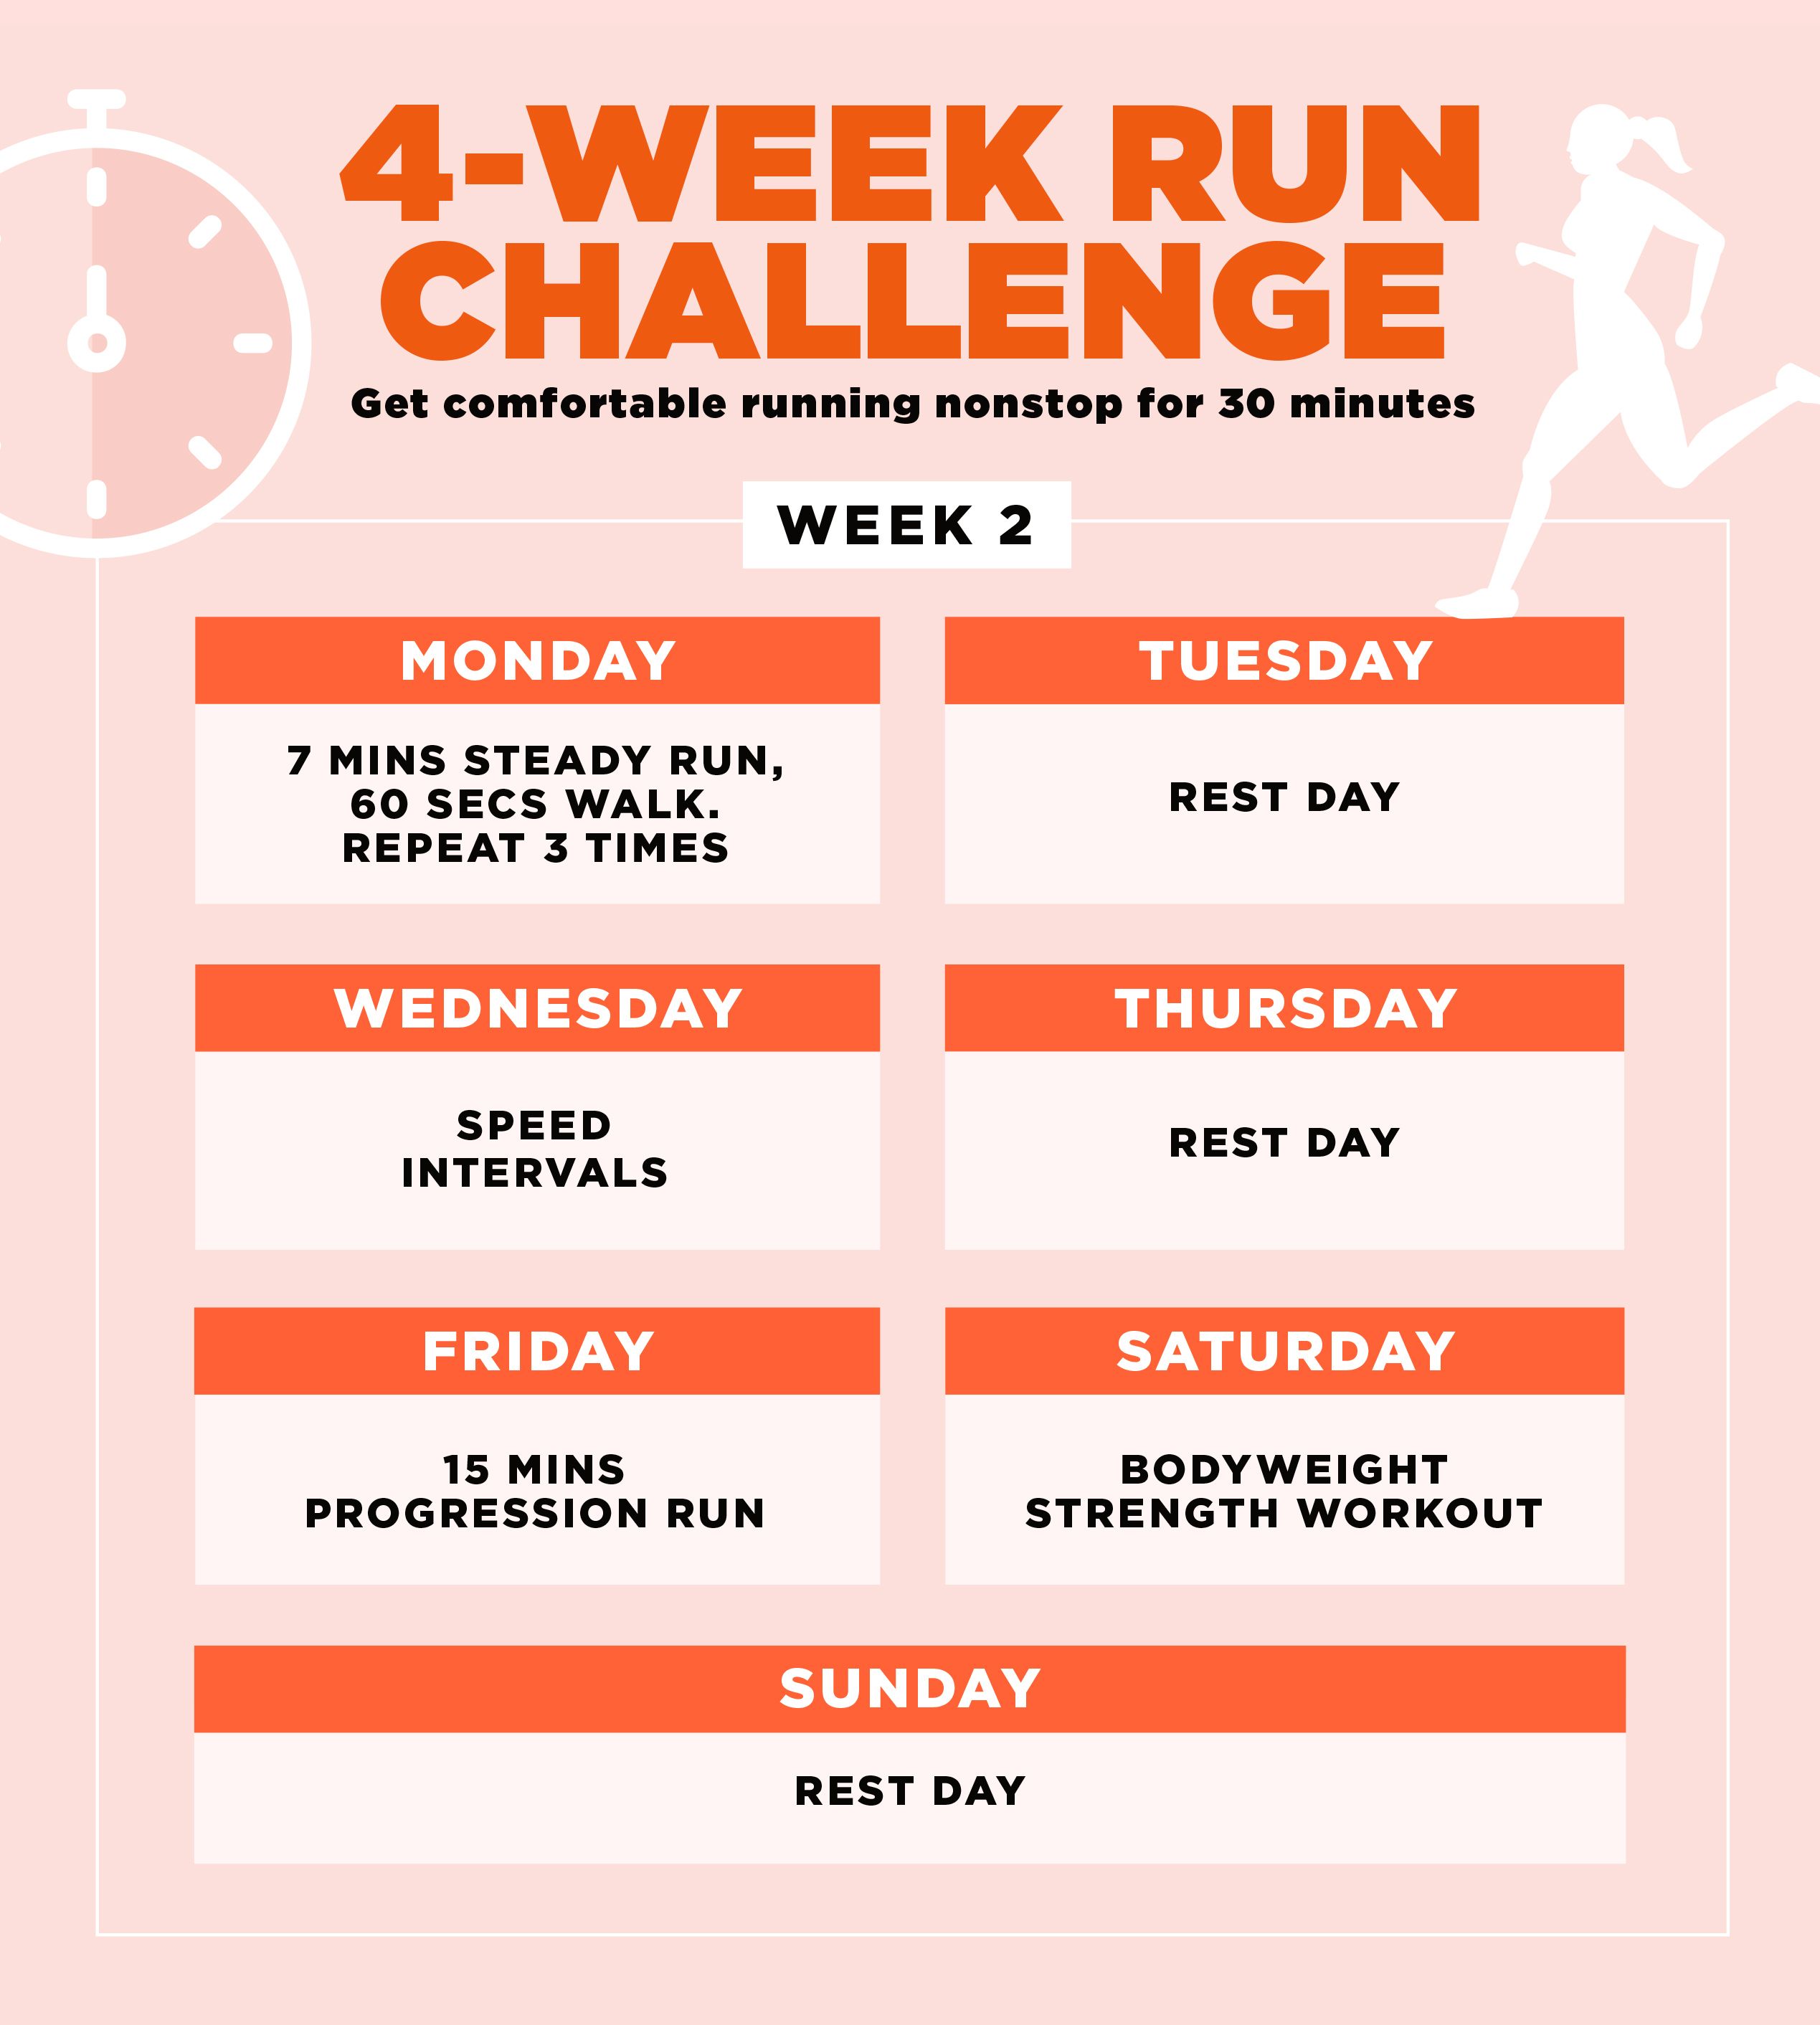 30 day running challenge